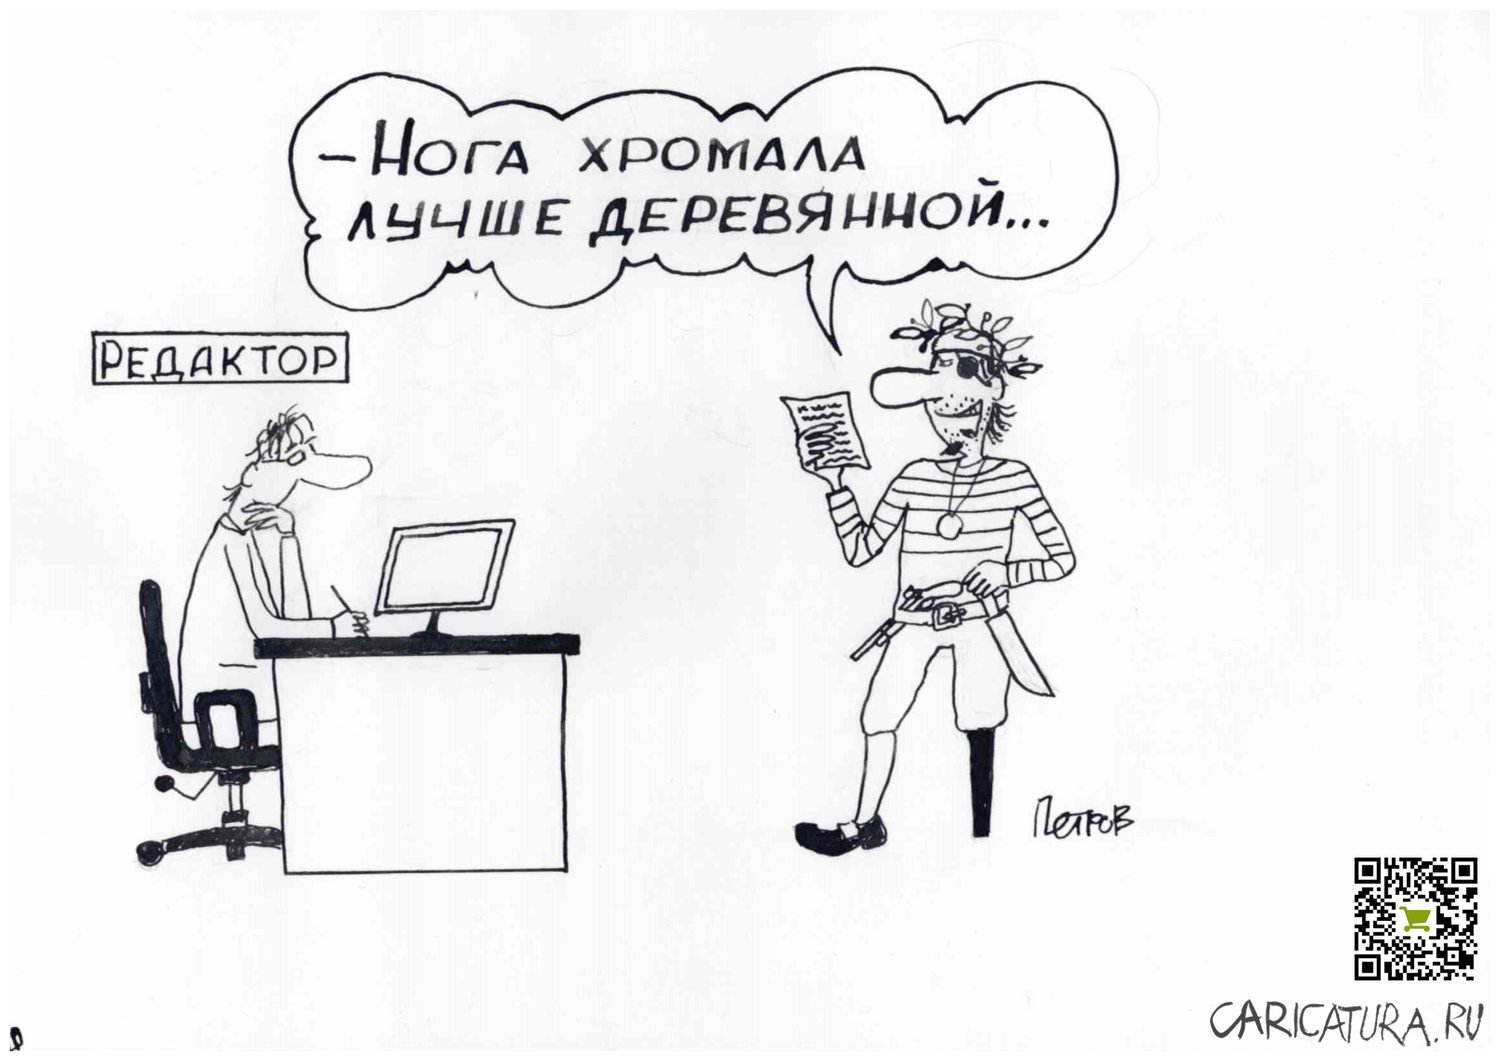 Карикатура "Пират поэт", Александр Петров